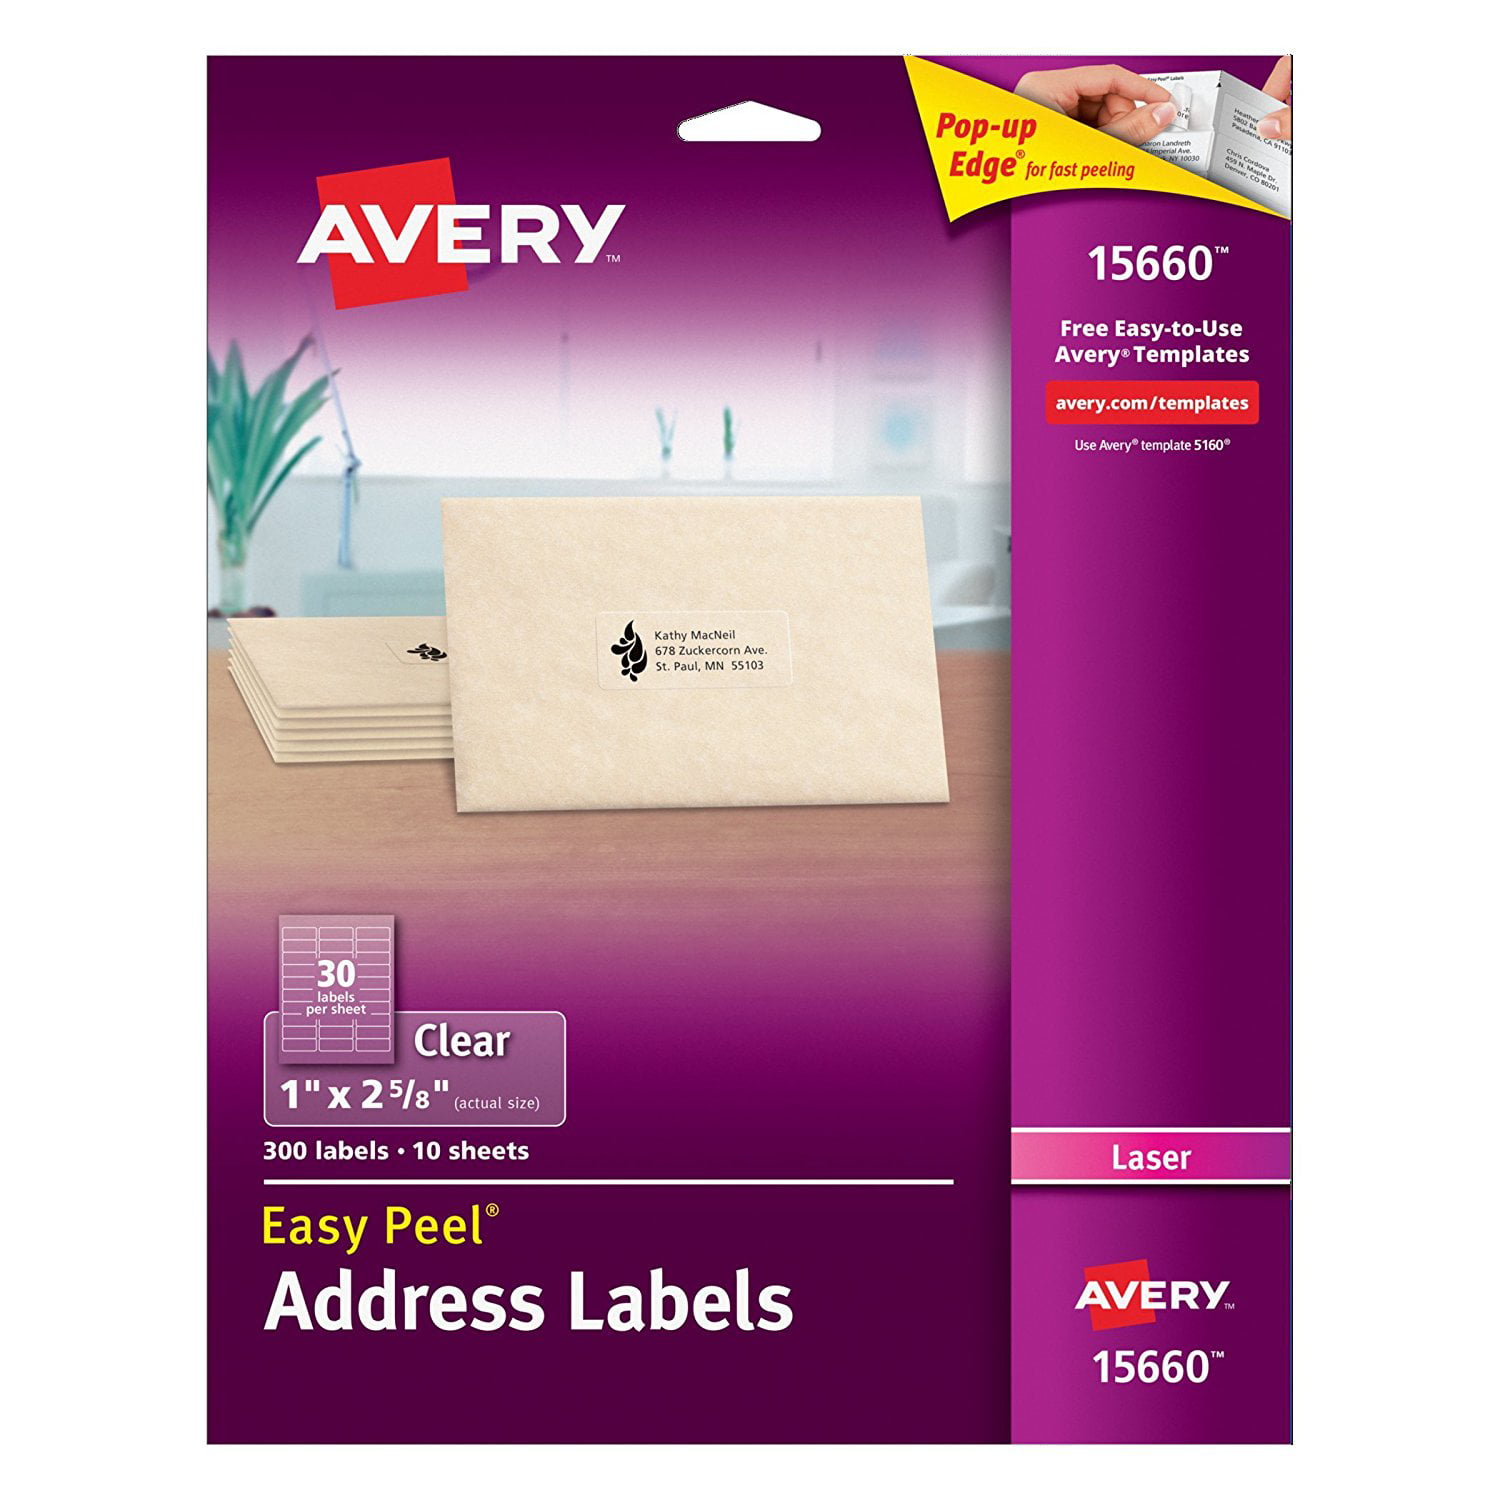 Avery Label Template 5262 Trovoadasonhos